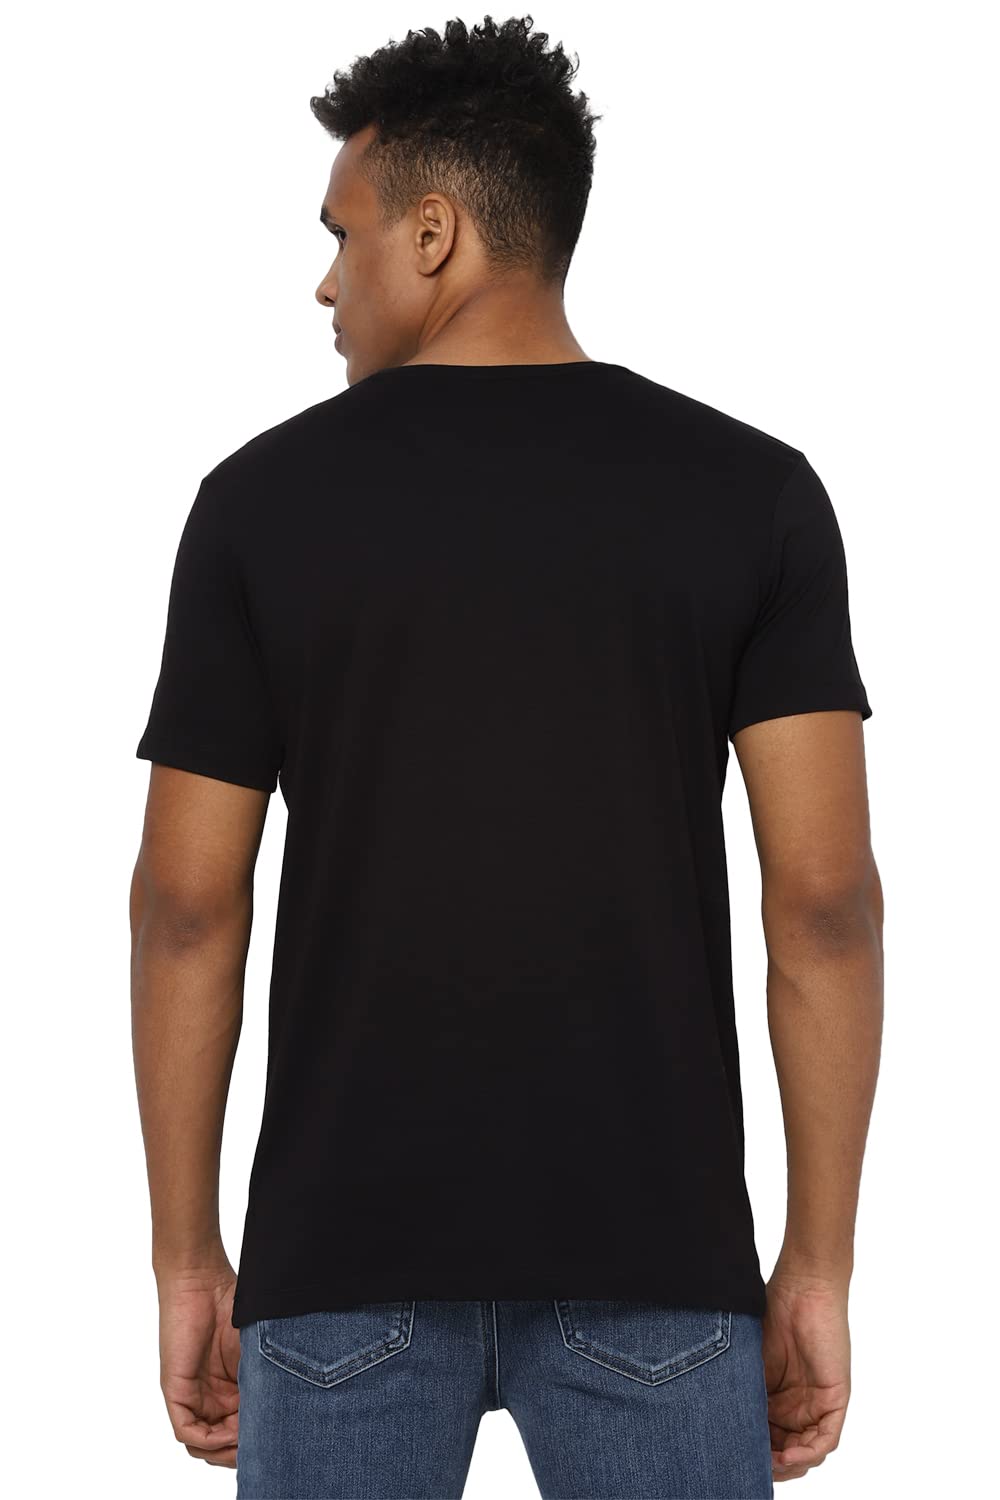 Allen Solly Men's Regular Fit T-Shirt (ALKCVSGF393116_Black_Large)